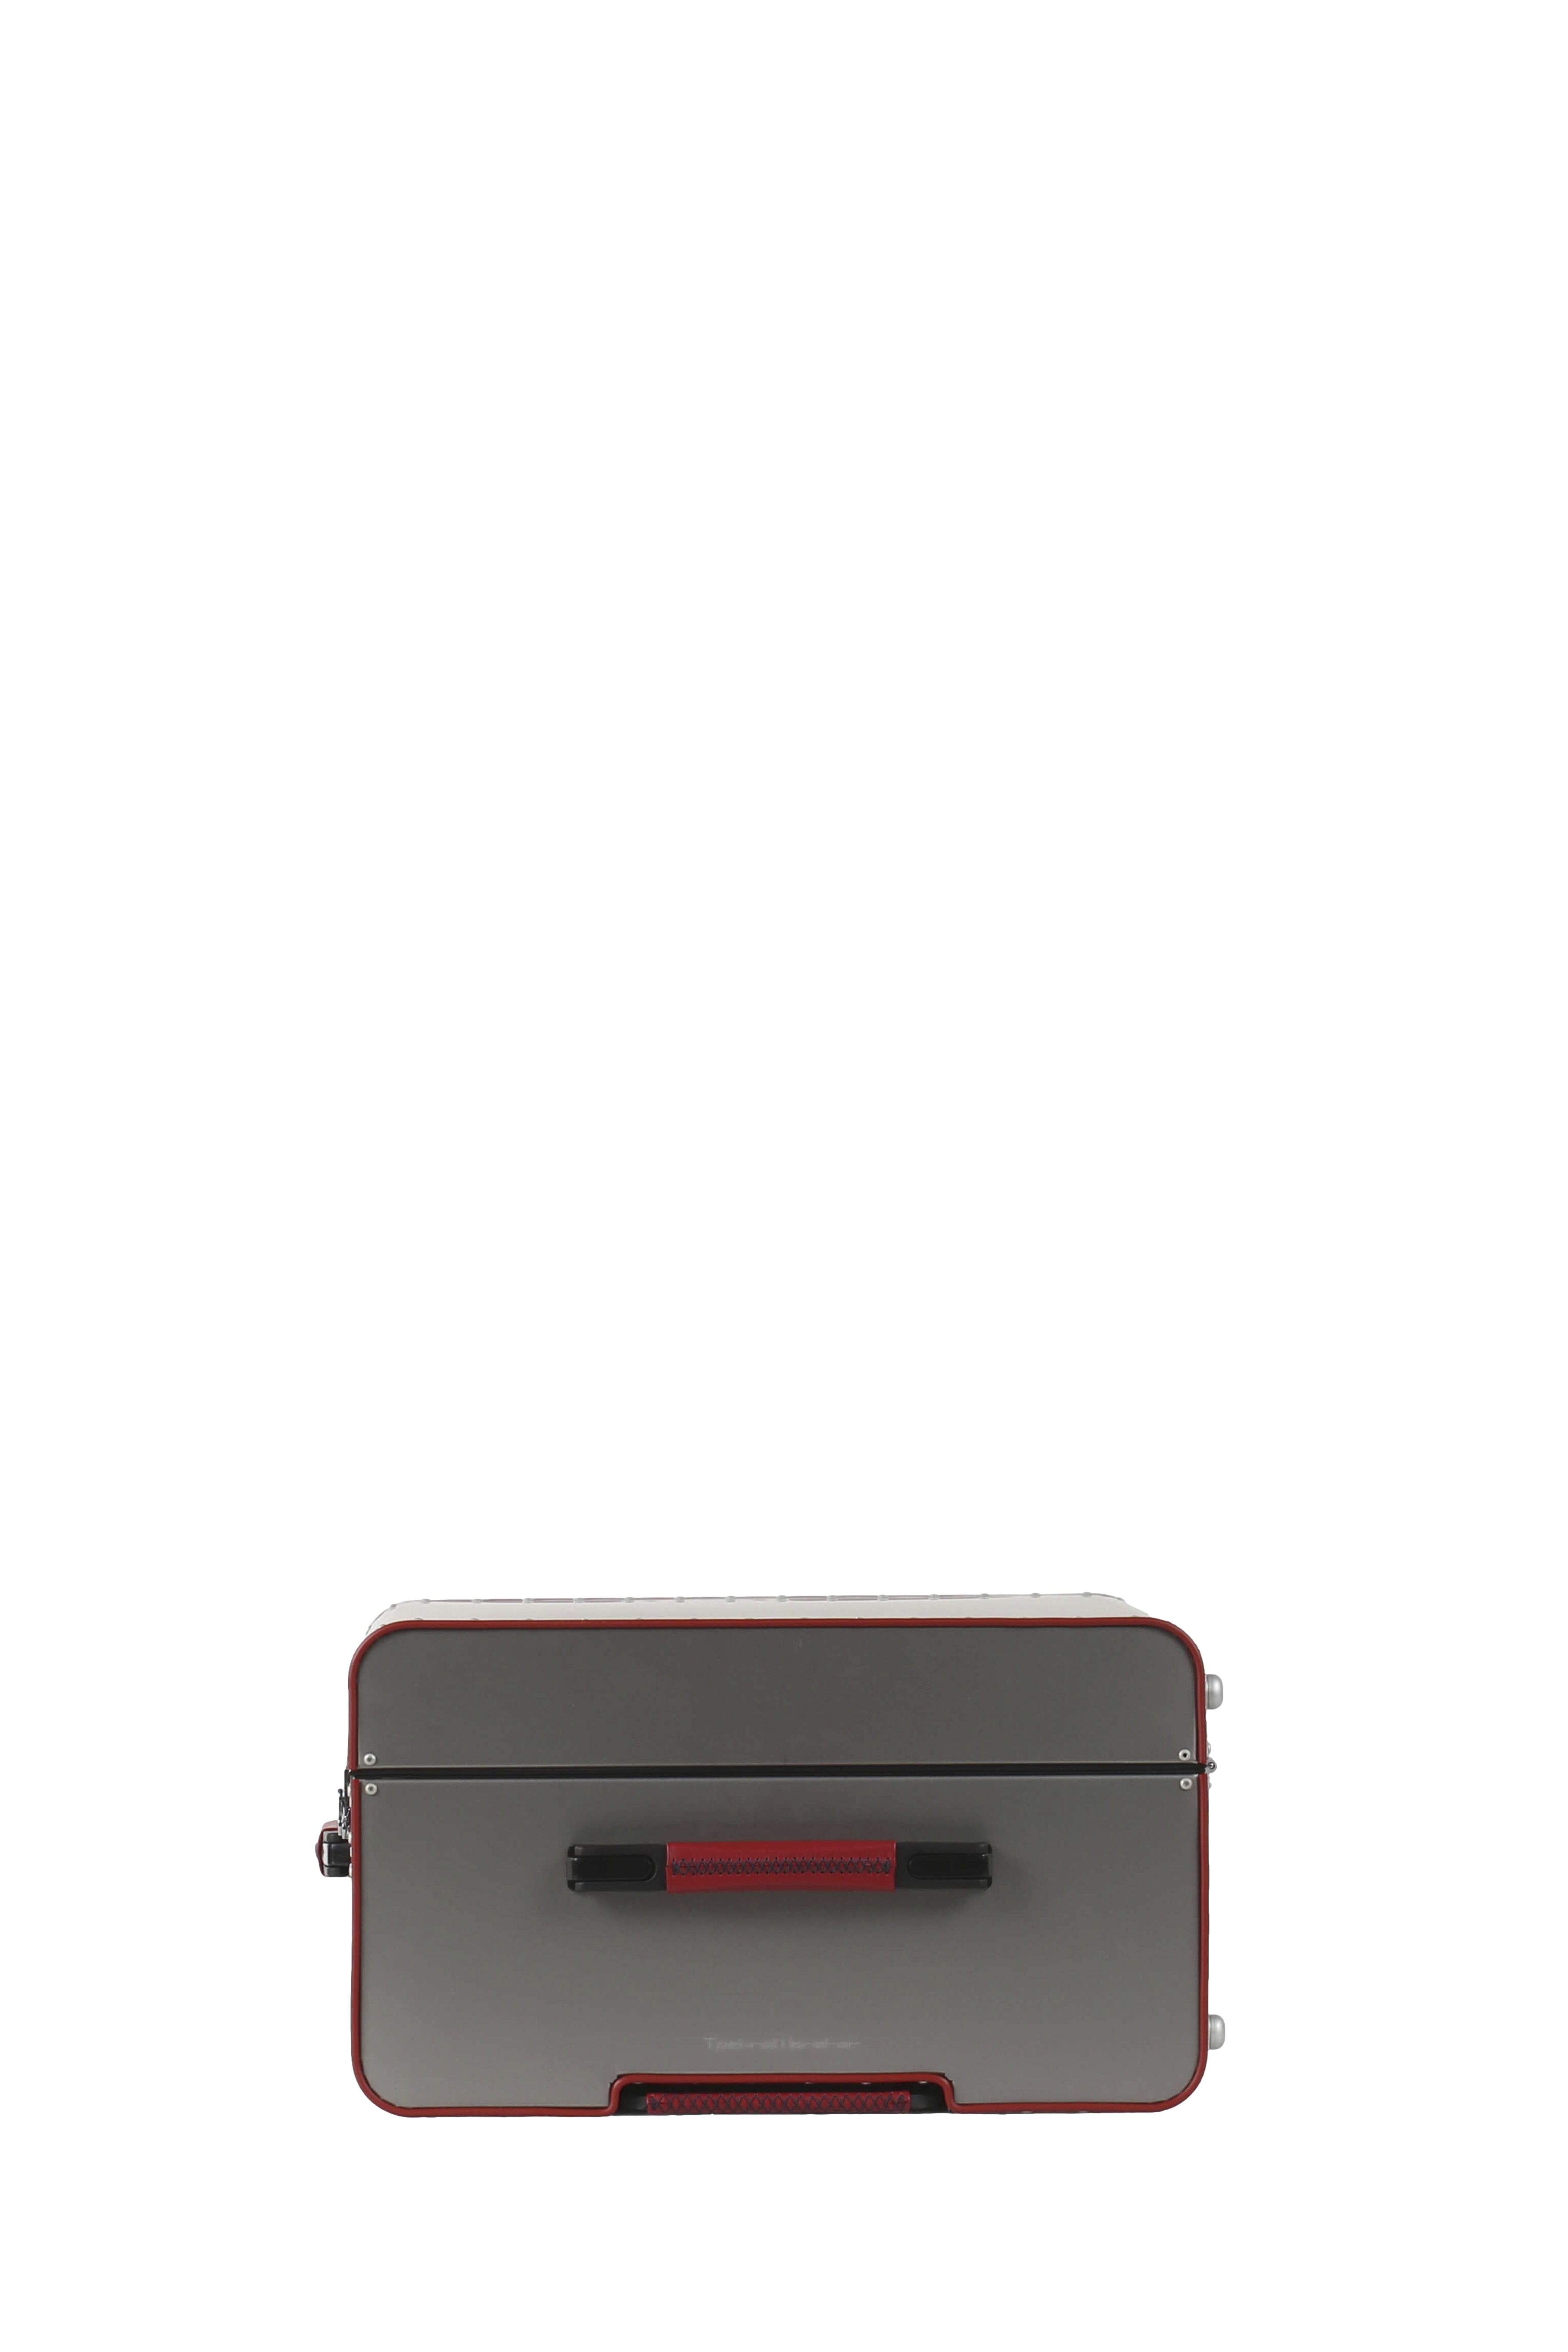 Kronos Titanium Check-In Luggage, Red